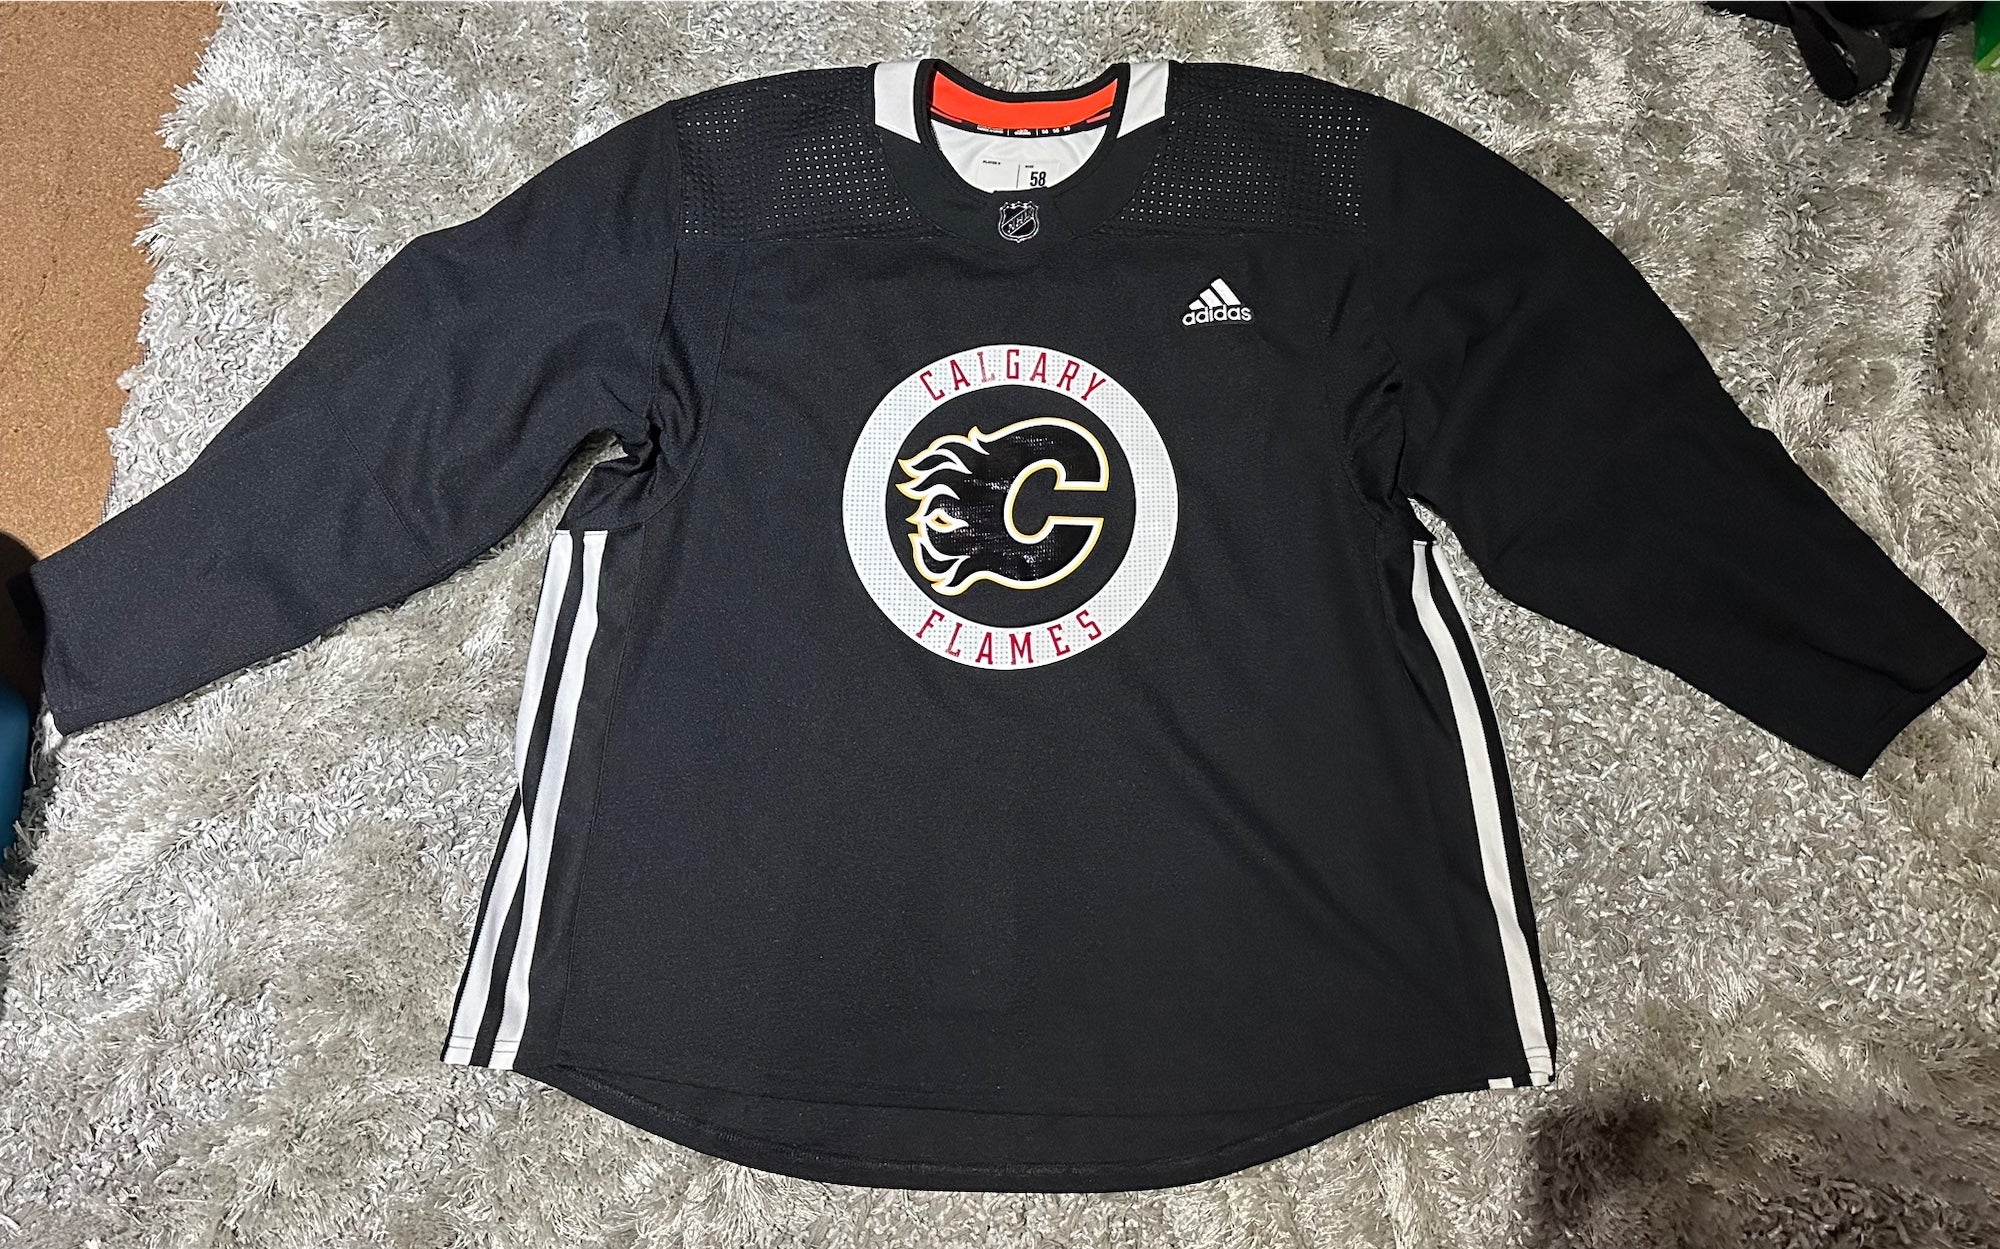 Calgary Flames Gear, Jerseys, Store, Pro Shop, Hockey Apparel